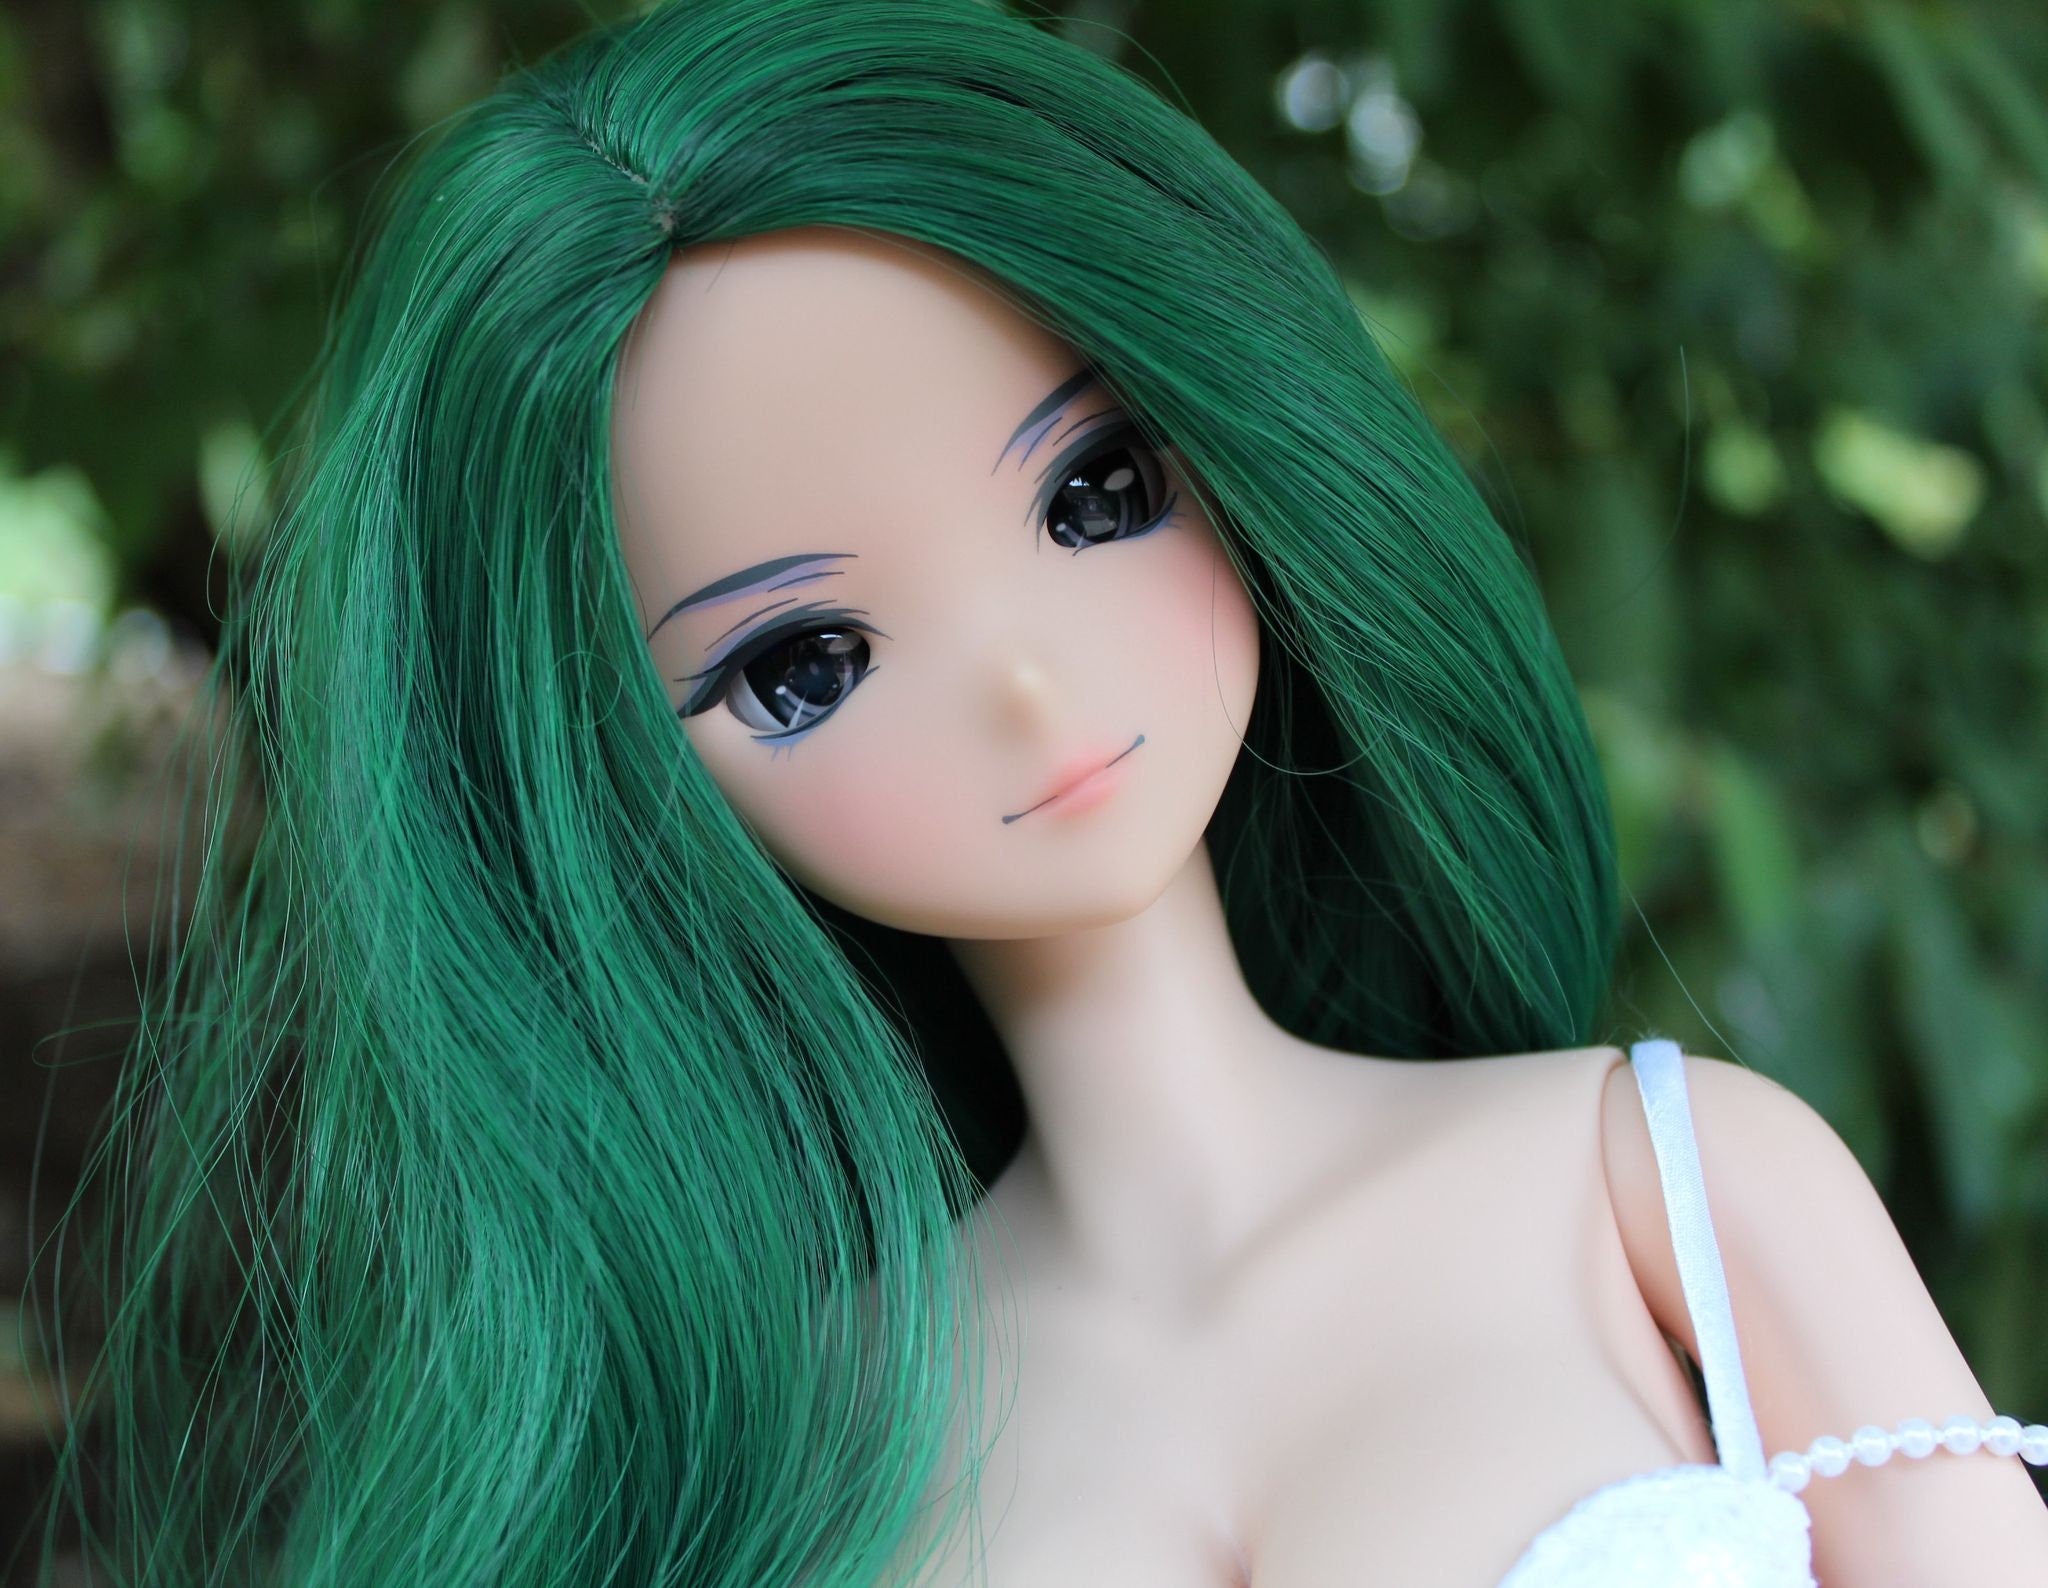 Custom doll WIG for Smart Dolls- Heat Safe - Tangle Resistant- 8.5" head size of Bjd, SD, Dollfie Dream dolls Emerald Green